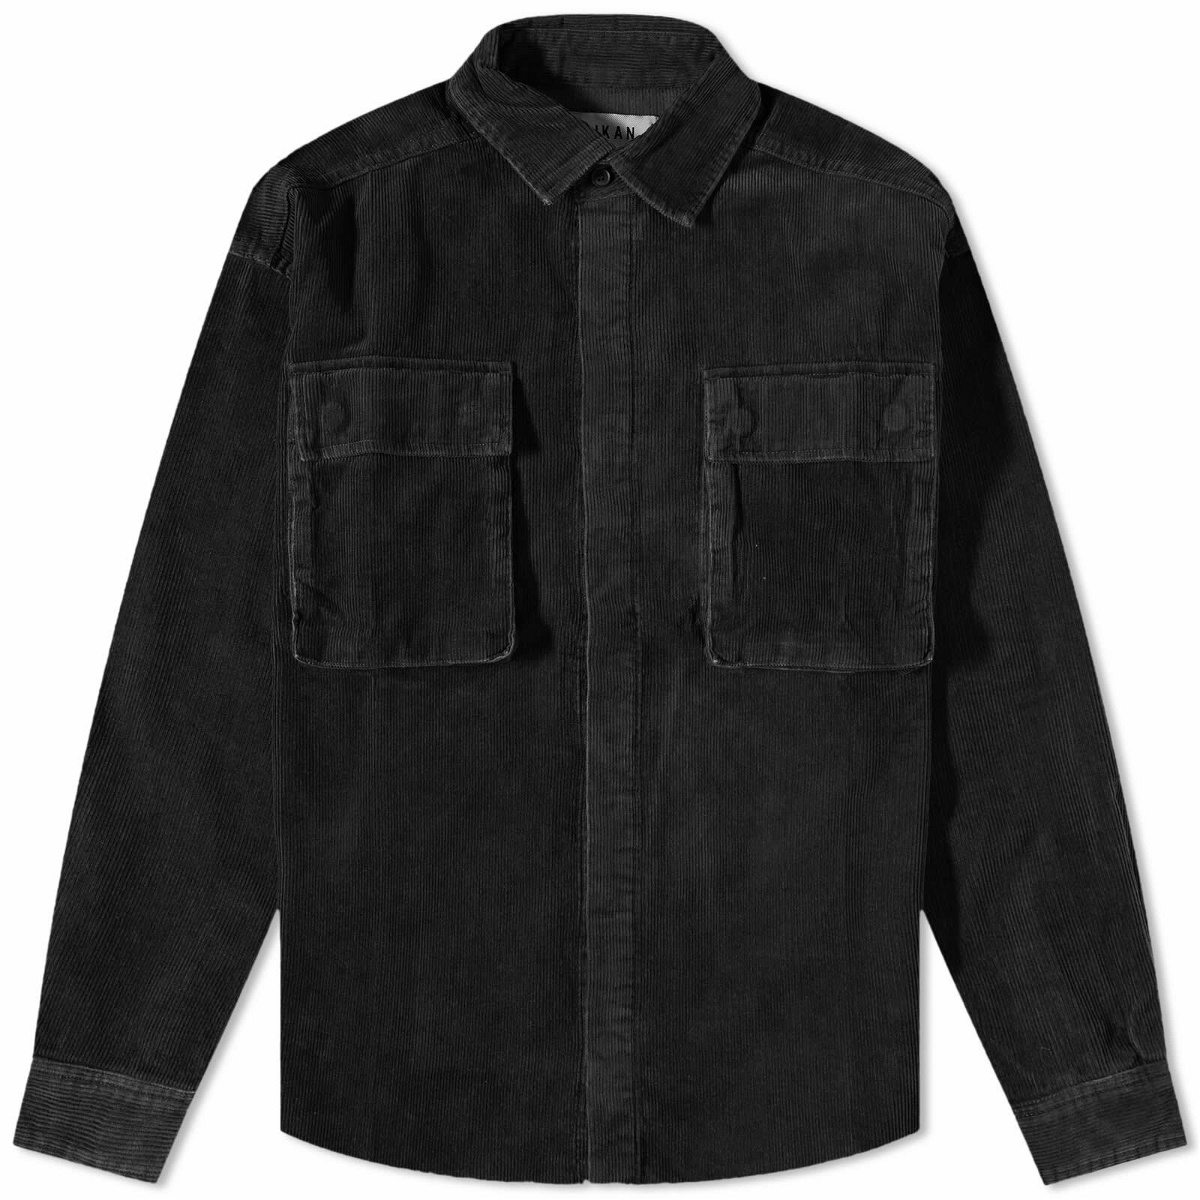 Taikan Men's Corduroy Shirt Jacket in Black Taikan